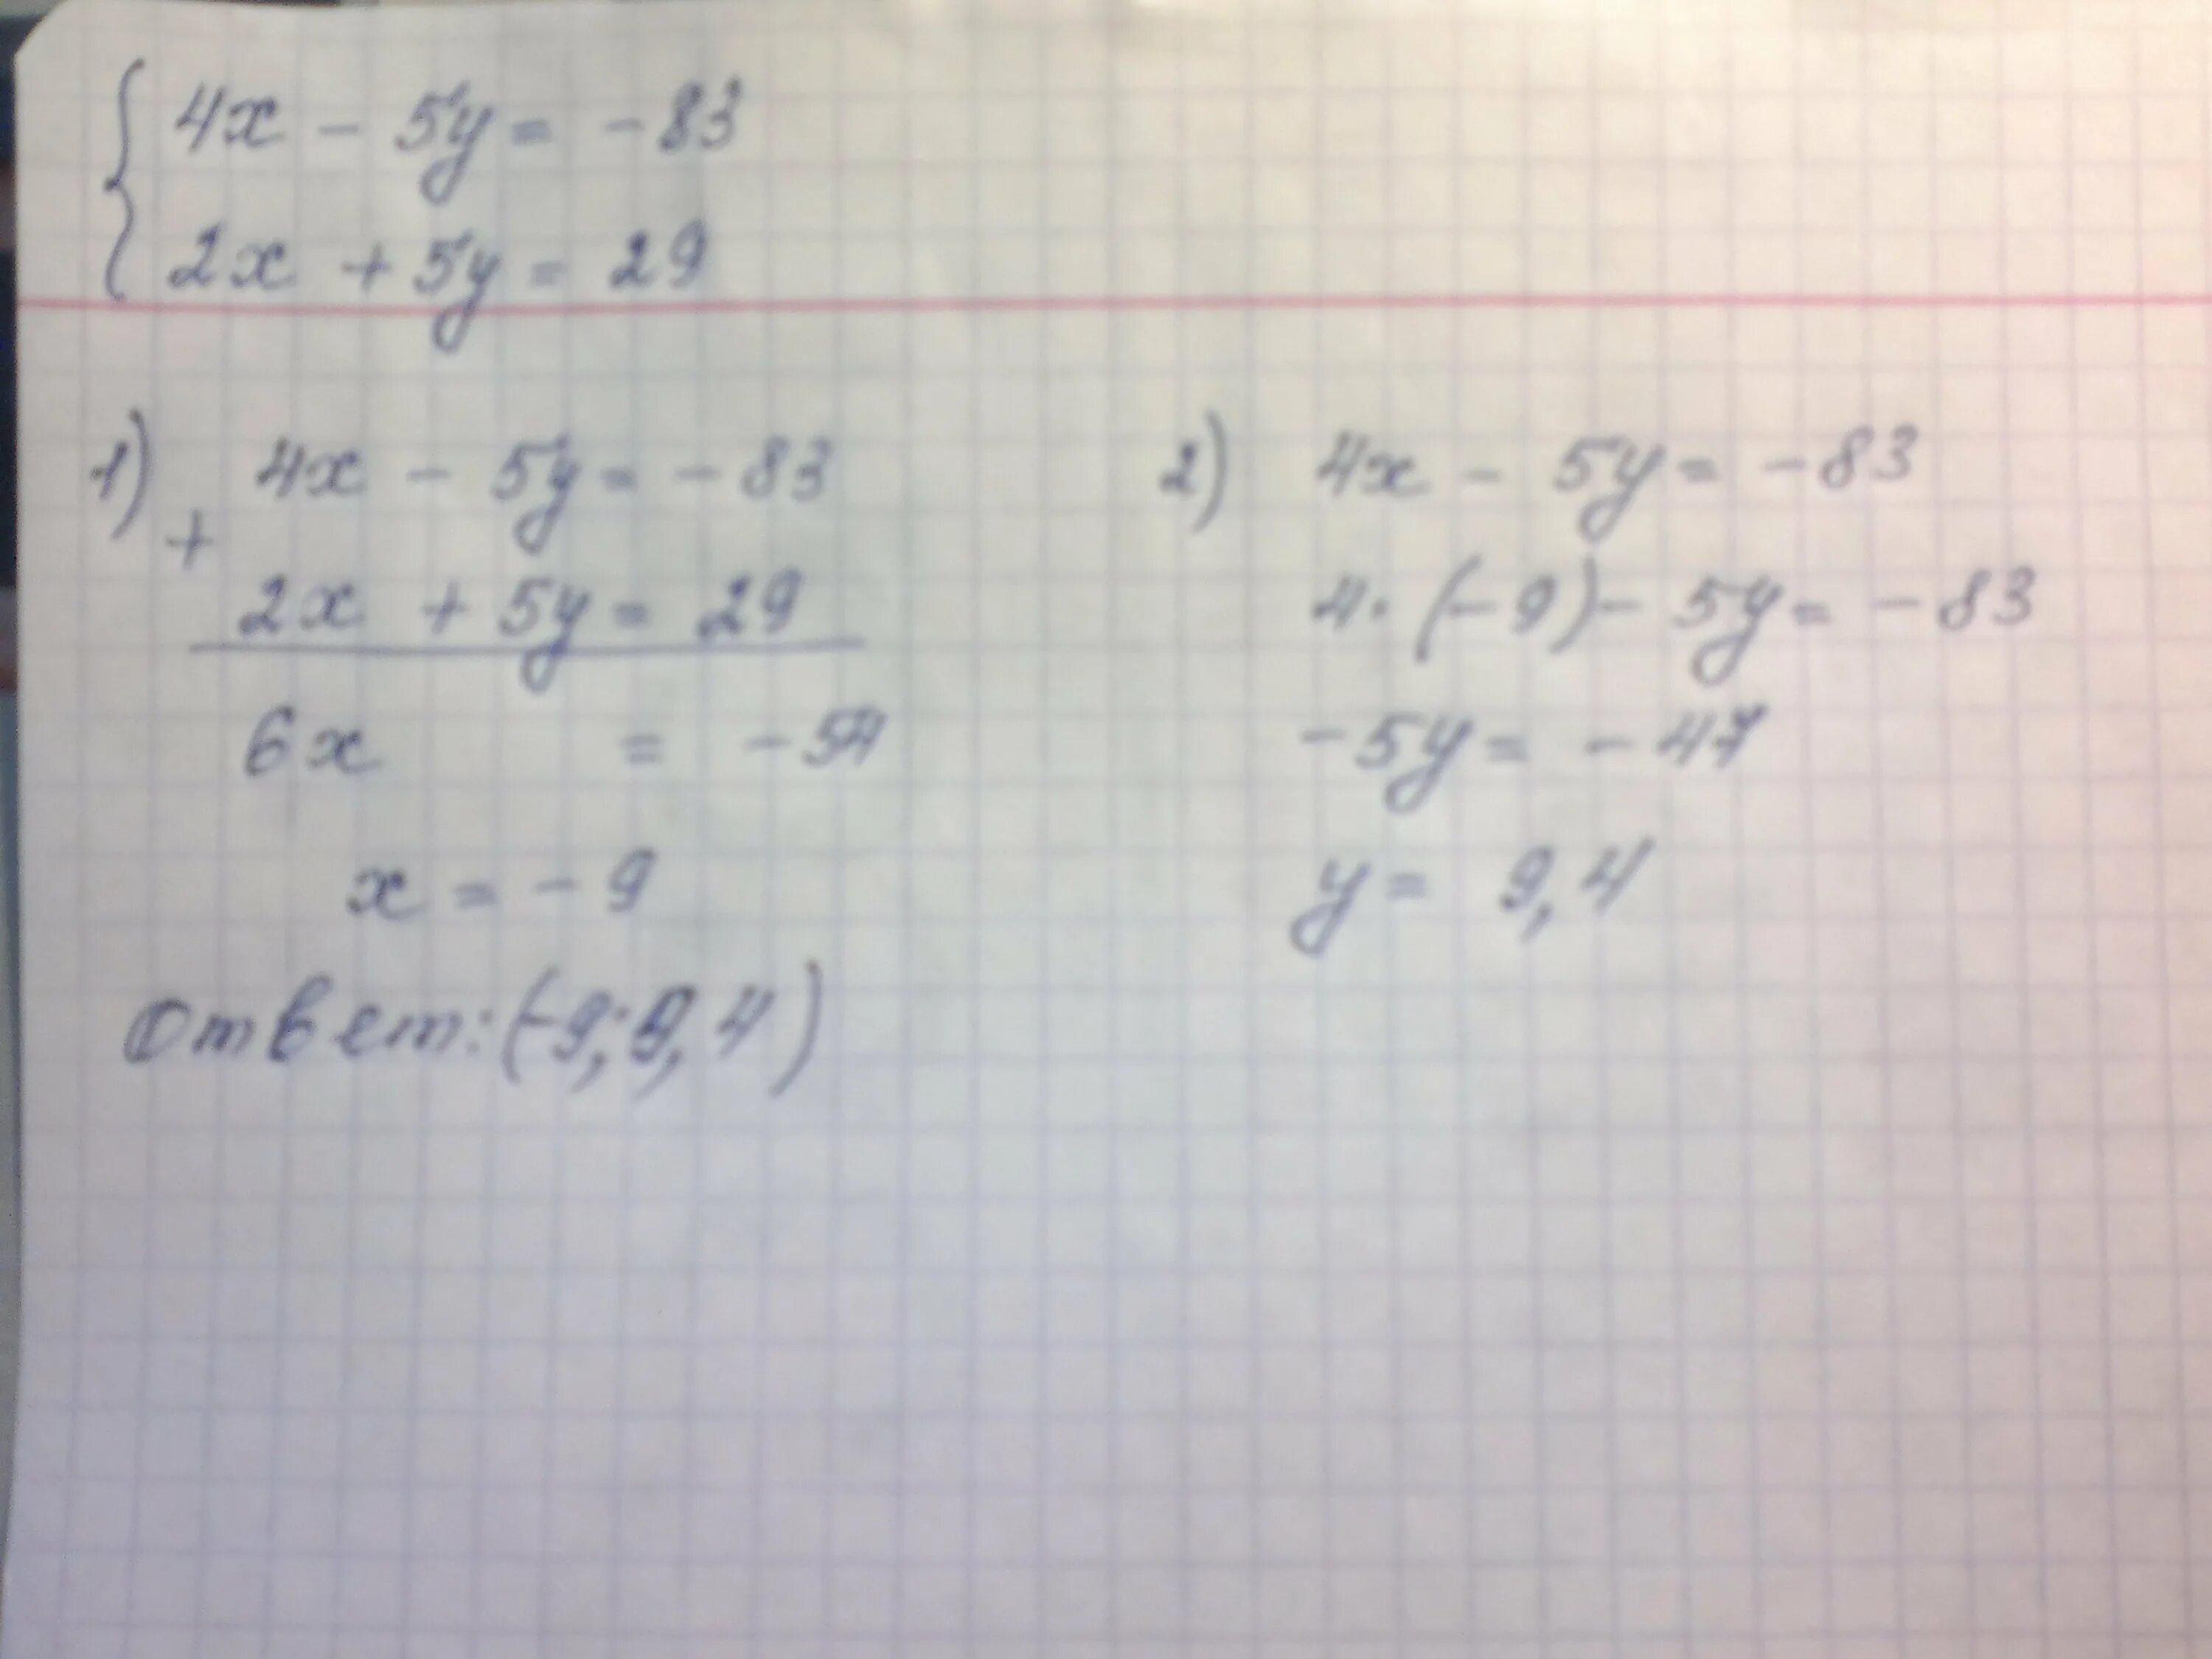 Реши уравнения 4x 2. Решите систему уравнений методом сложения 4x-5y=-2. Решите методом сложения систему уравнений 4x-5y -83. Решите методом сложения систему уравнений 4x-5y -83 2x+5y 29. 4x 5y 83 2x+5y 29 методом сложения.